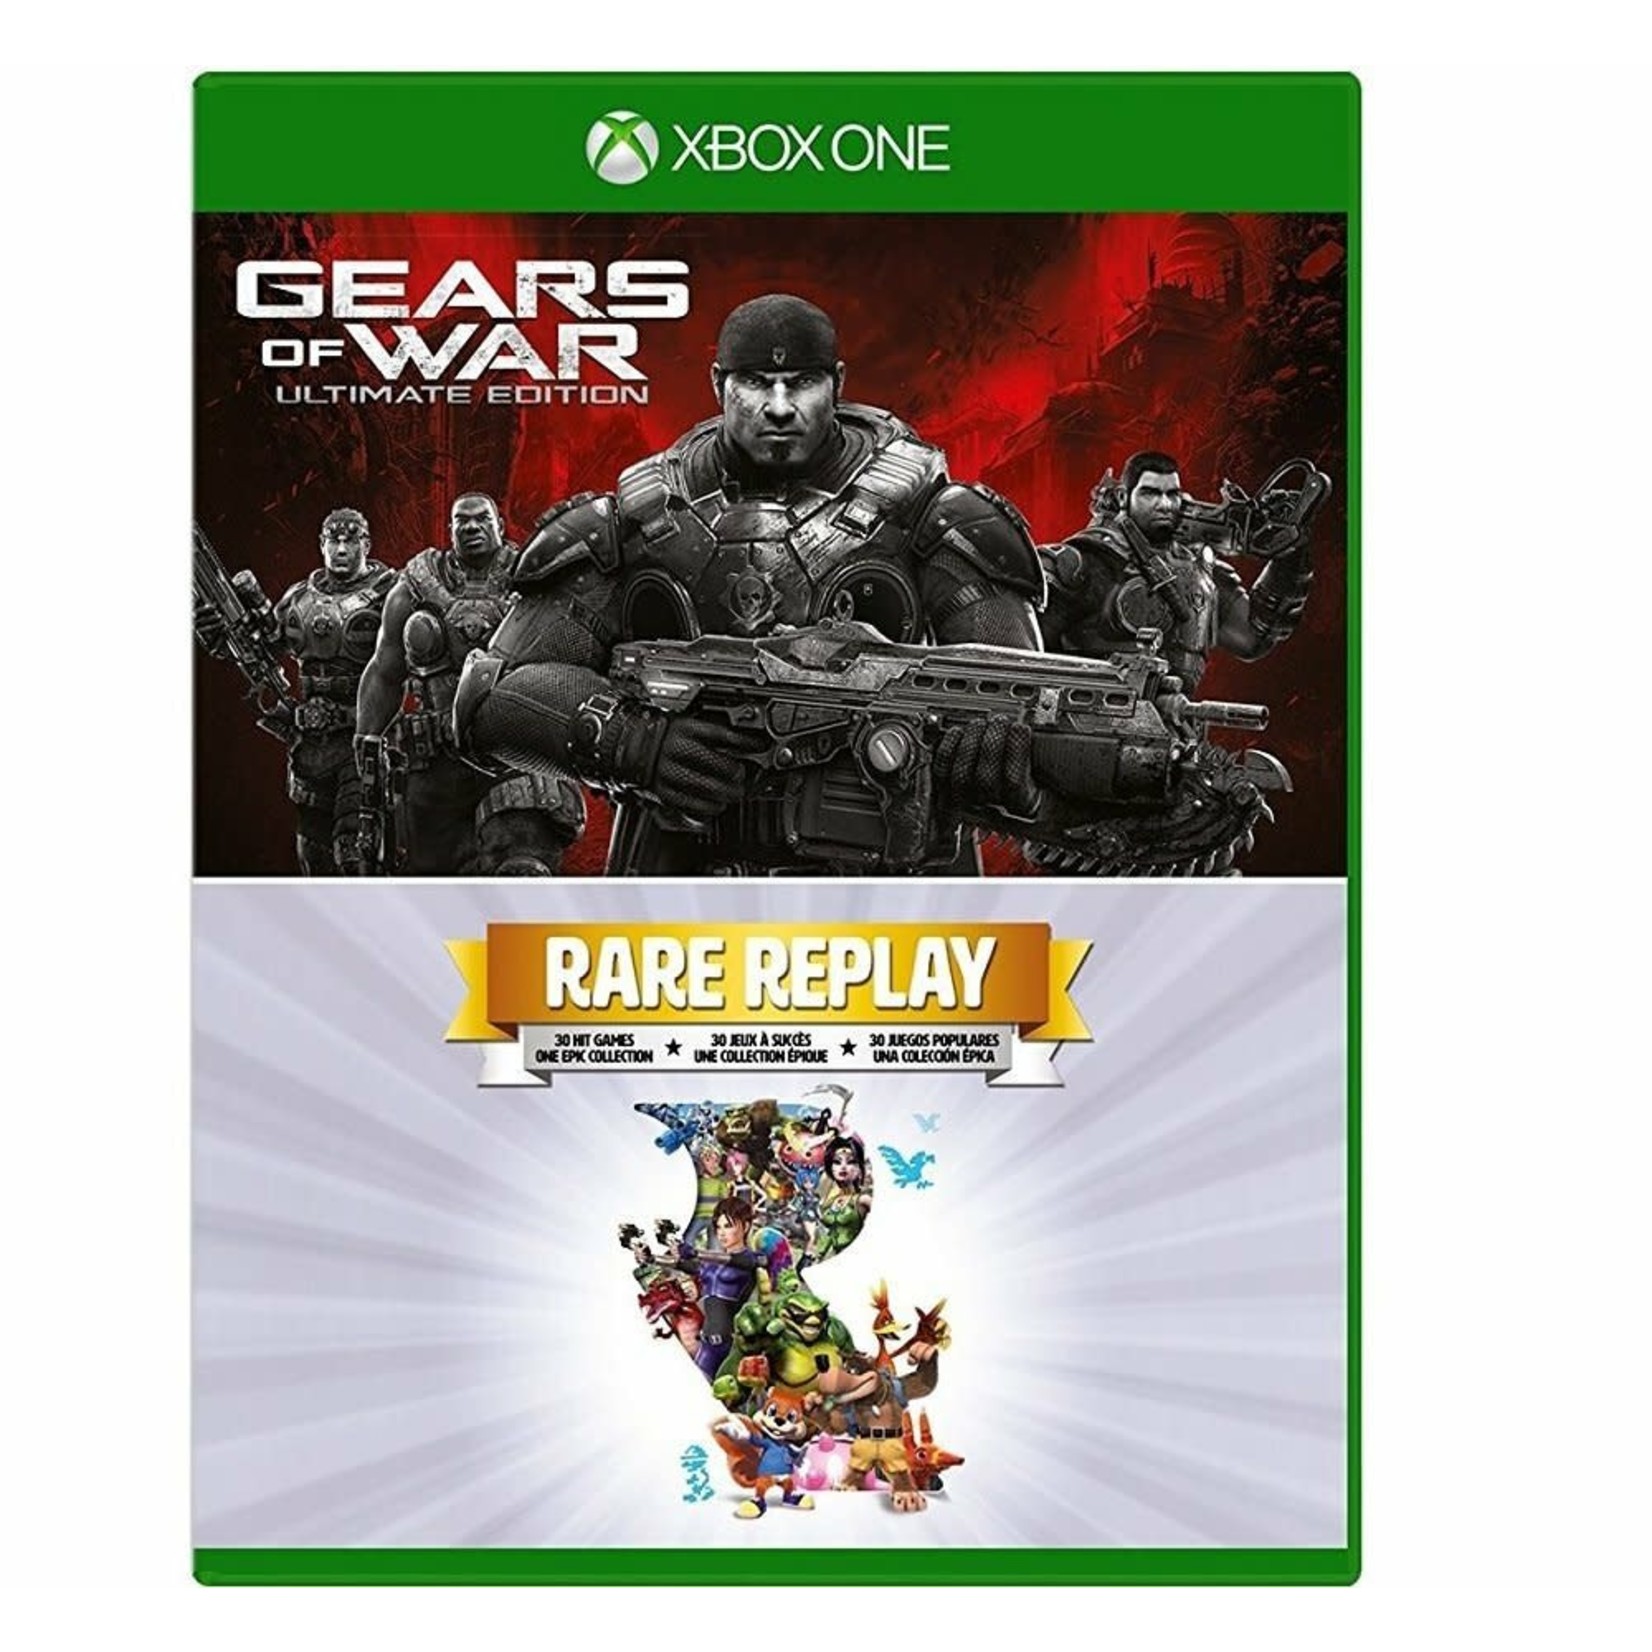 XB1U-Gears of War Ultimate Edition & Rare Replay